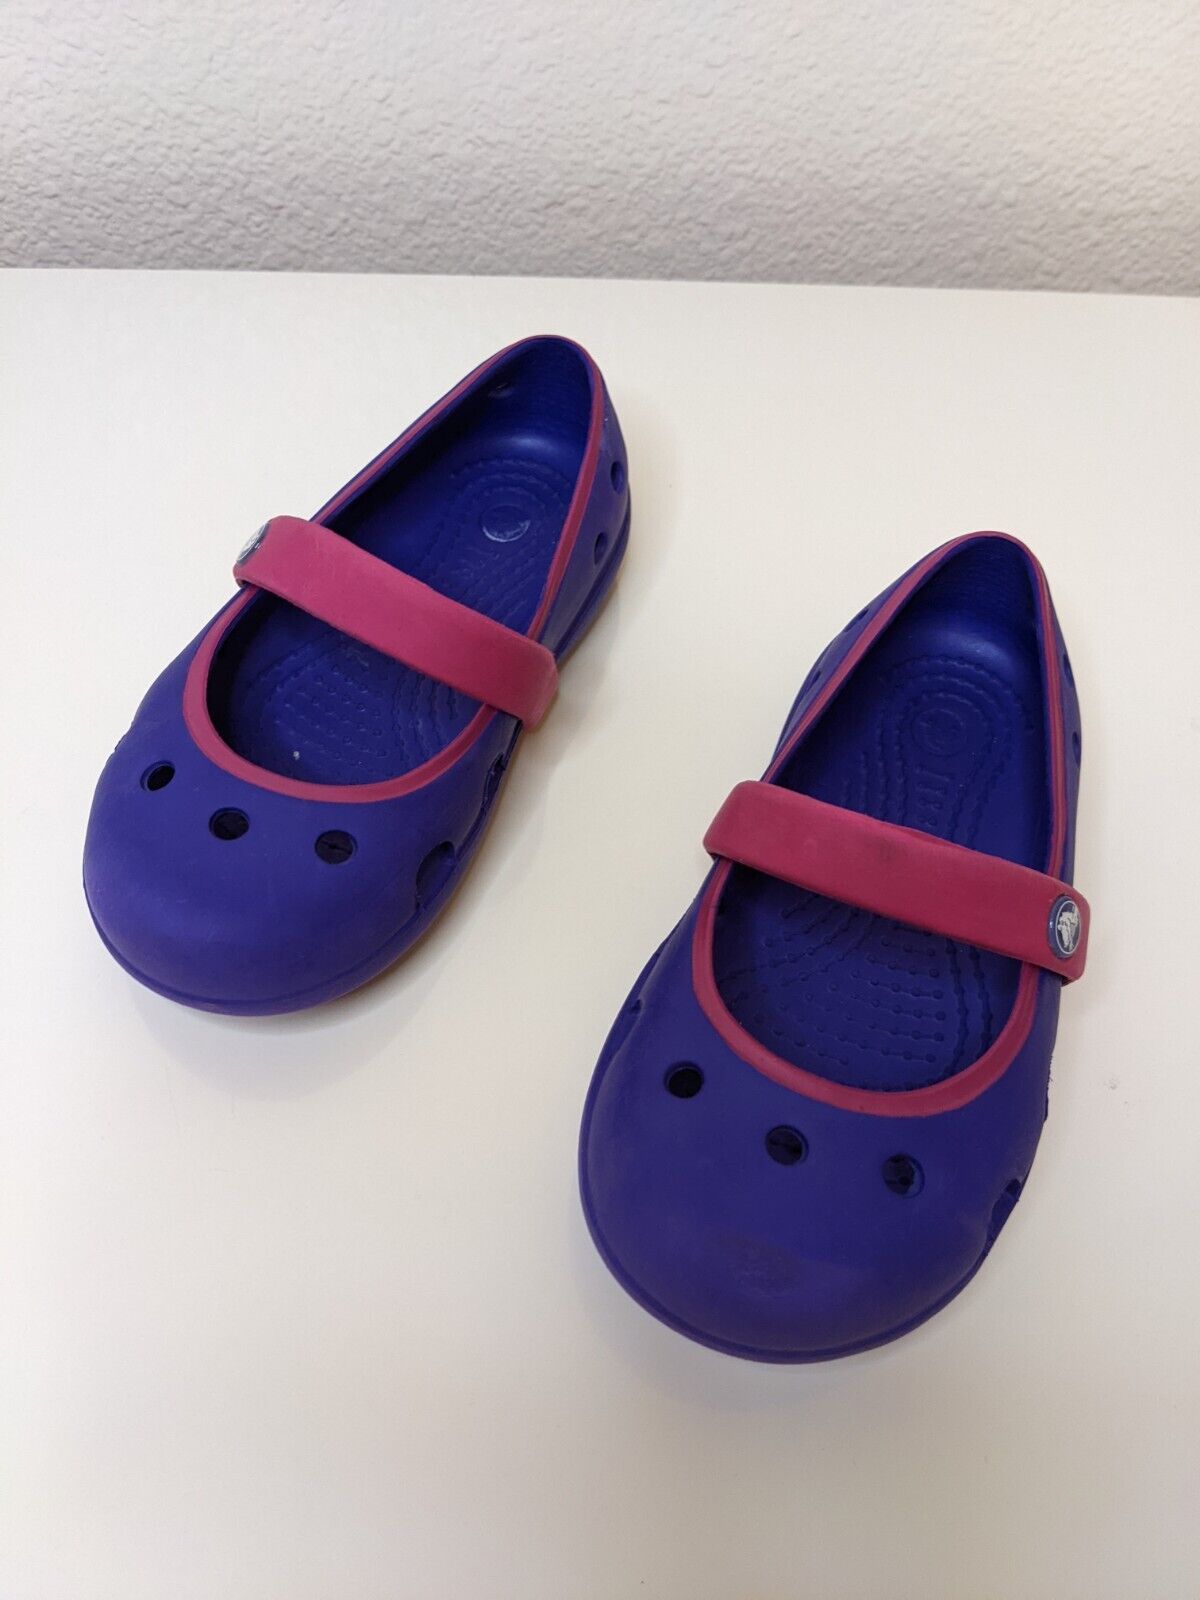 Crocs Mary Jane Purple Flats Shoes Girls - Size C 3 Cute And Fun